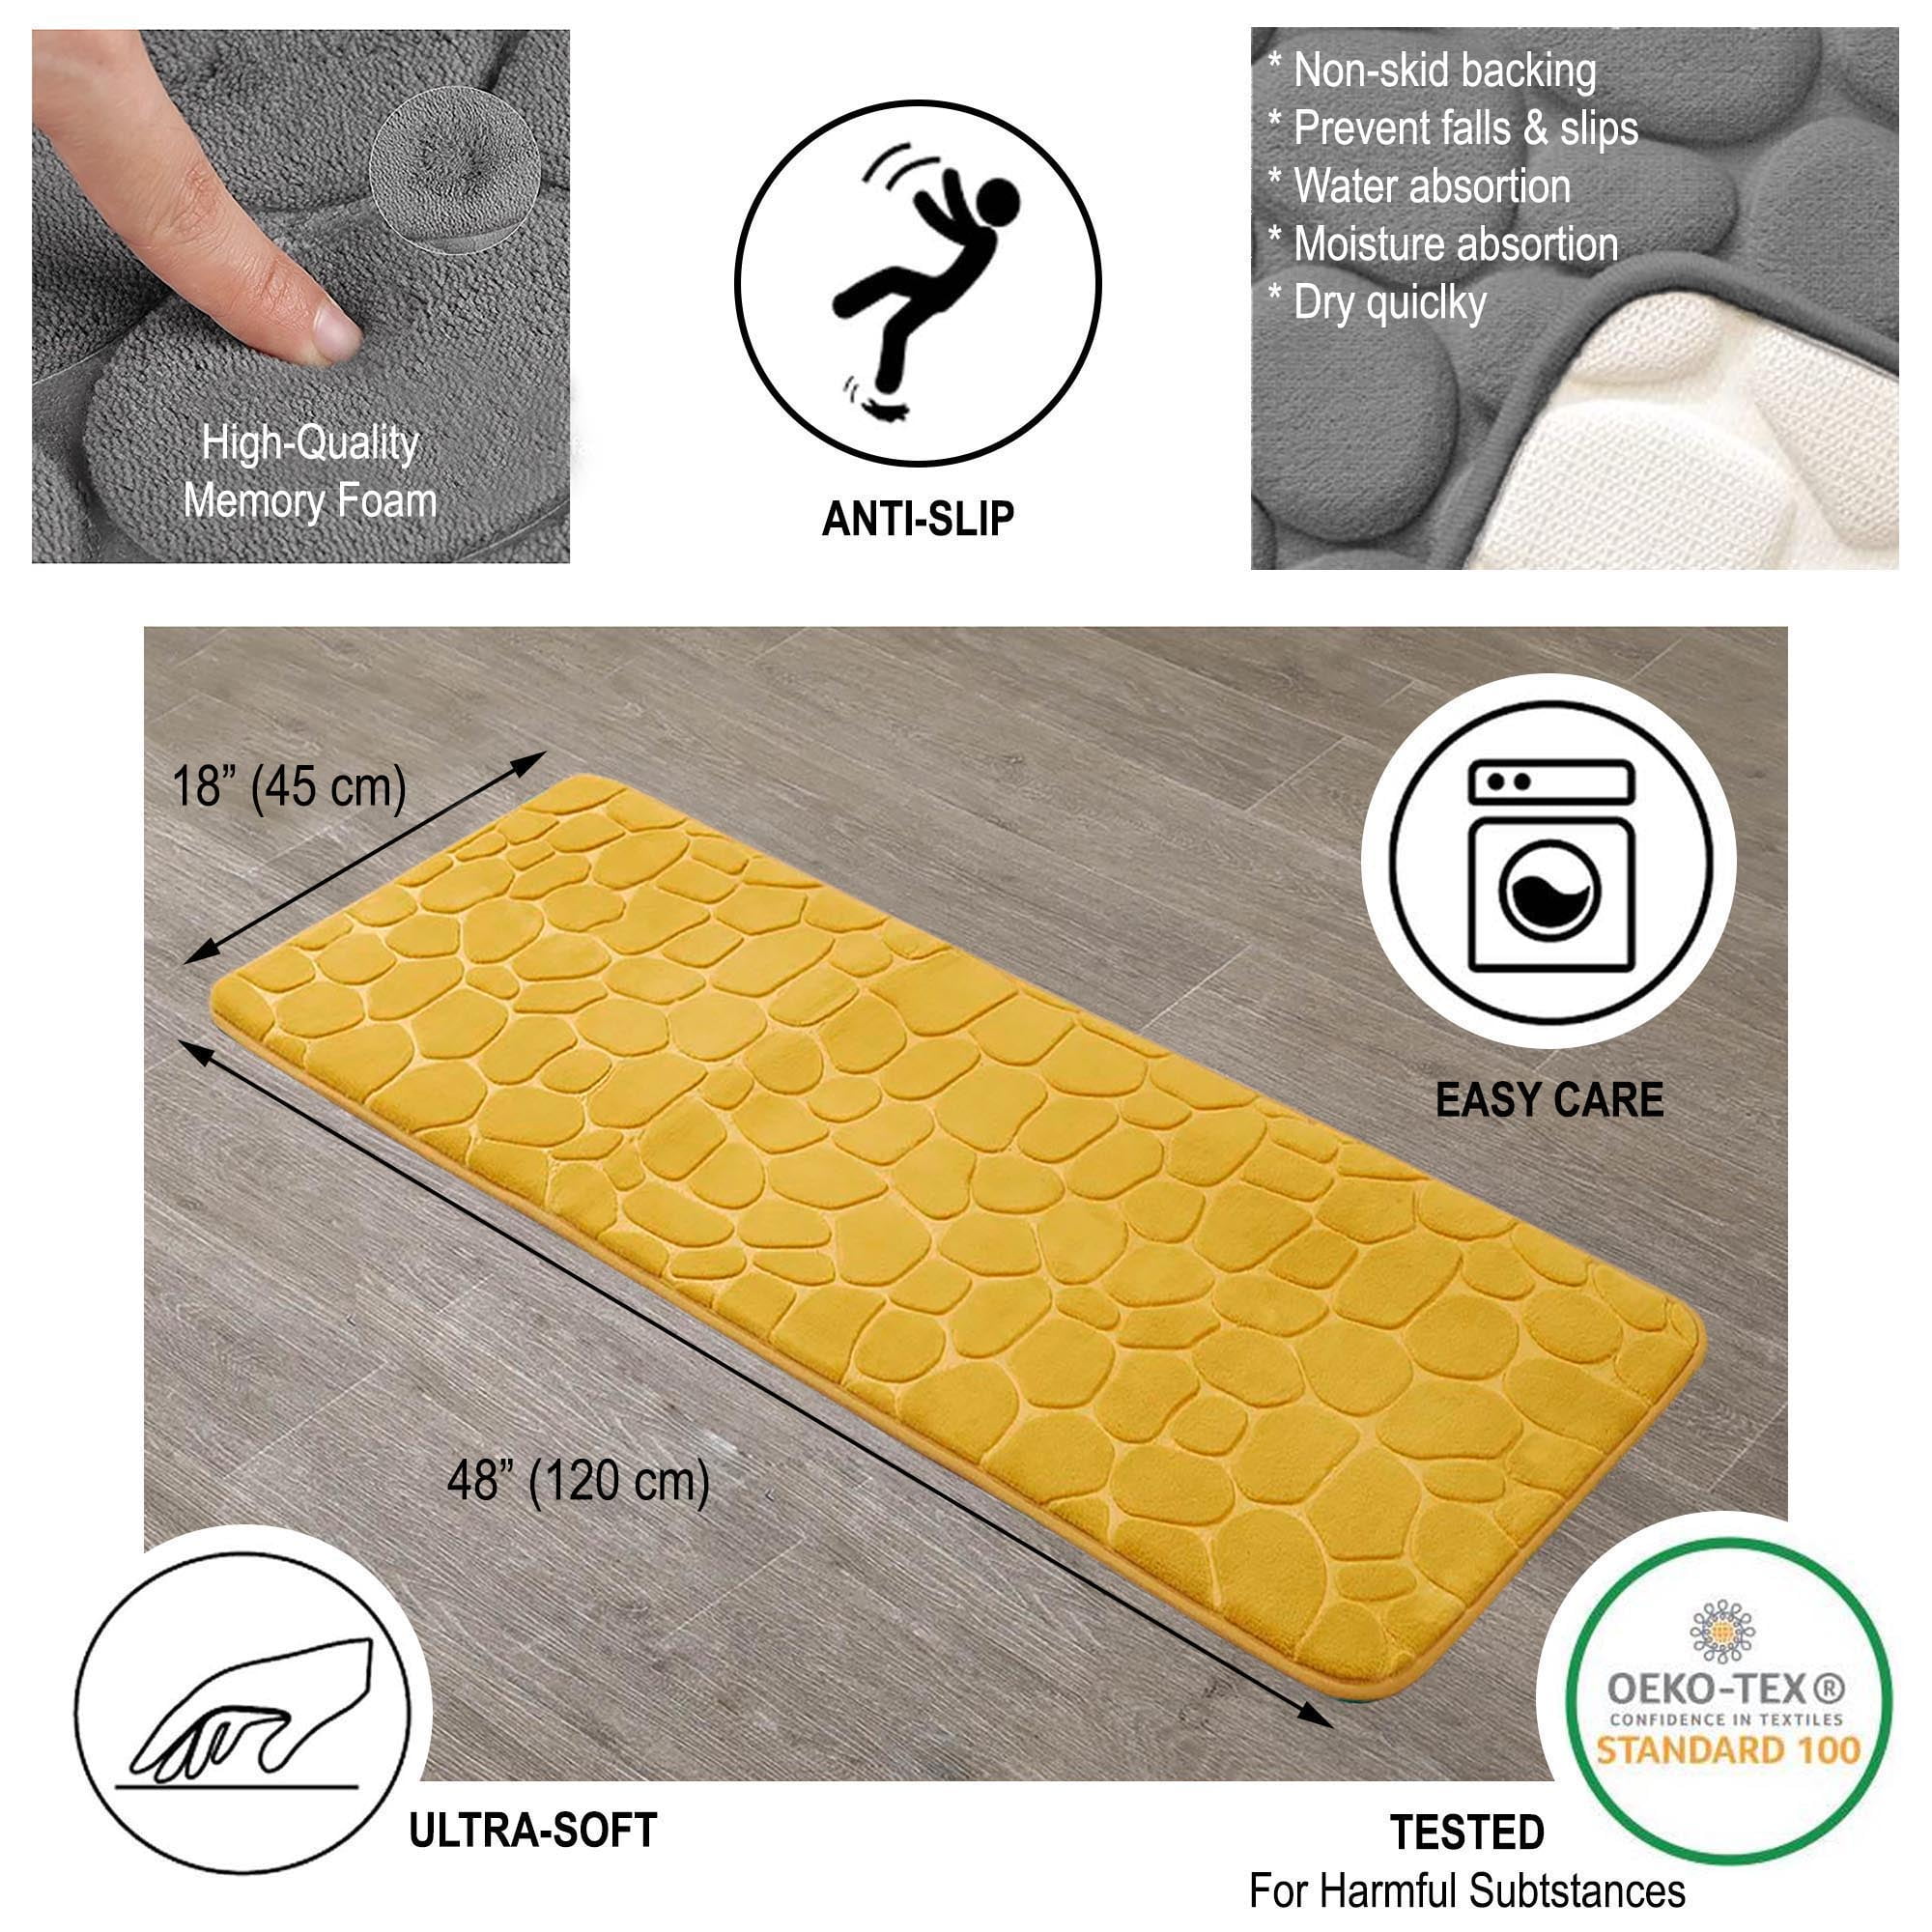 Contour Bath Rug Memory Foam Mat 3D Pebble 20L x 20W - Yellow Mustard